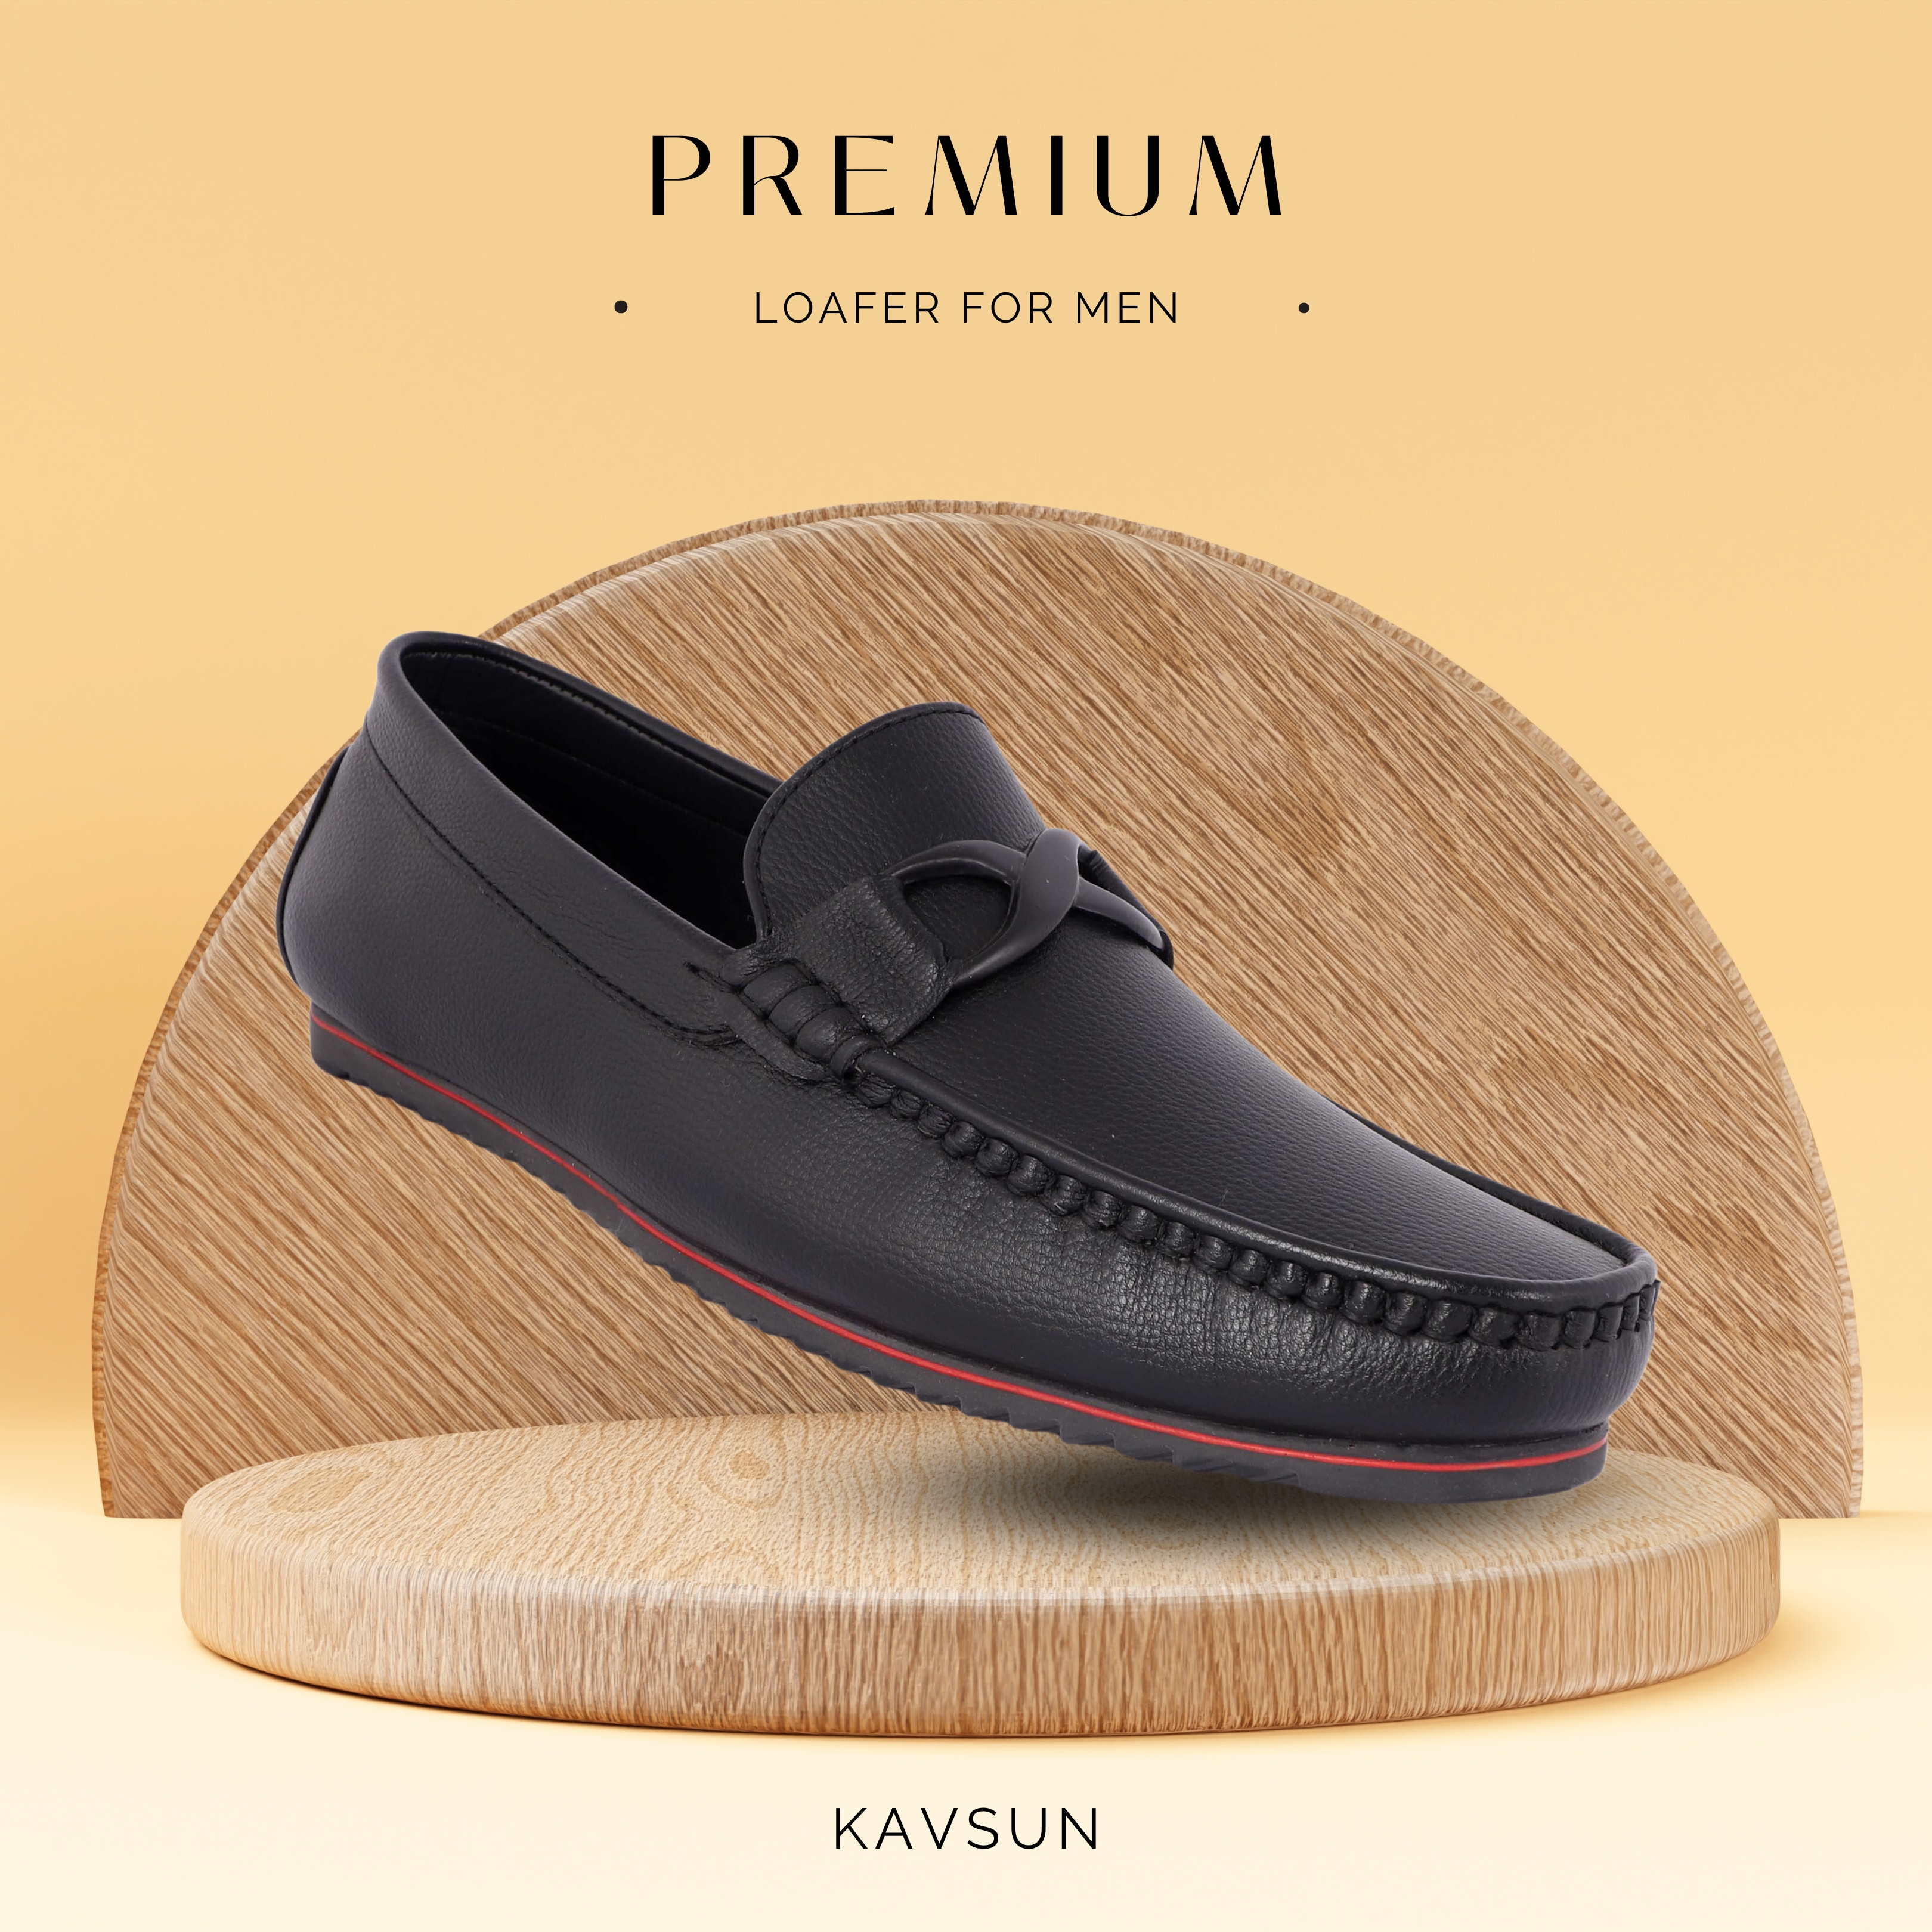 KAVSUN Attractive Premium Loafers For Men